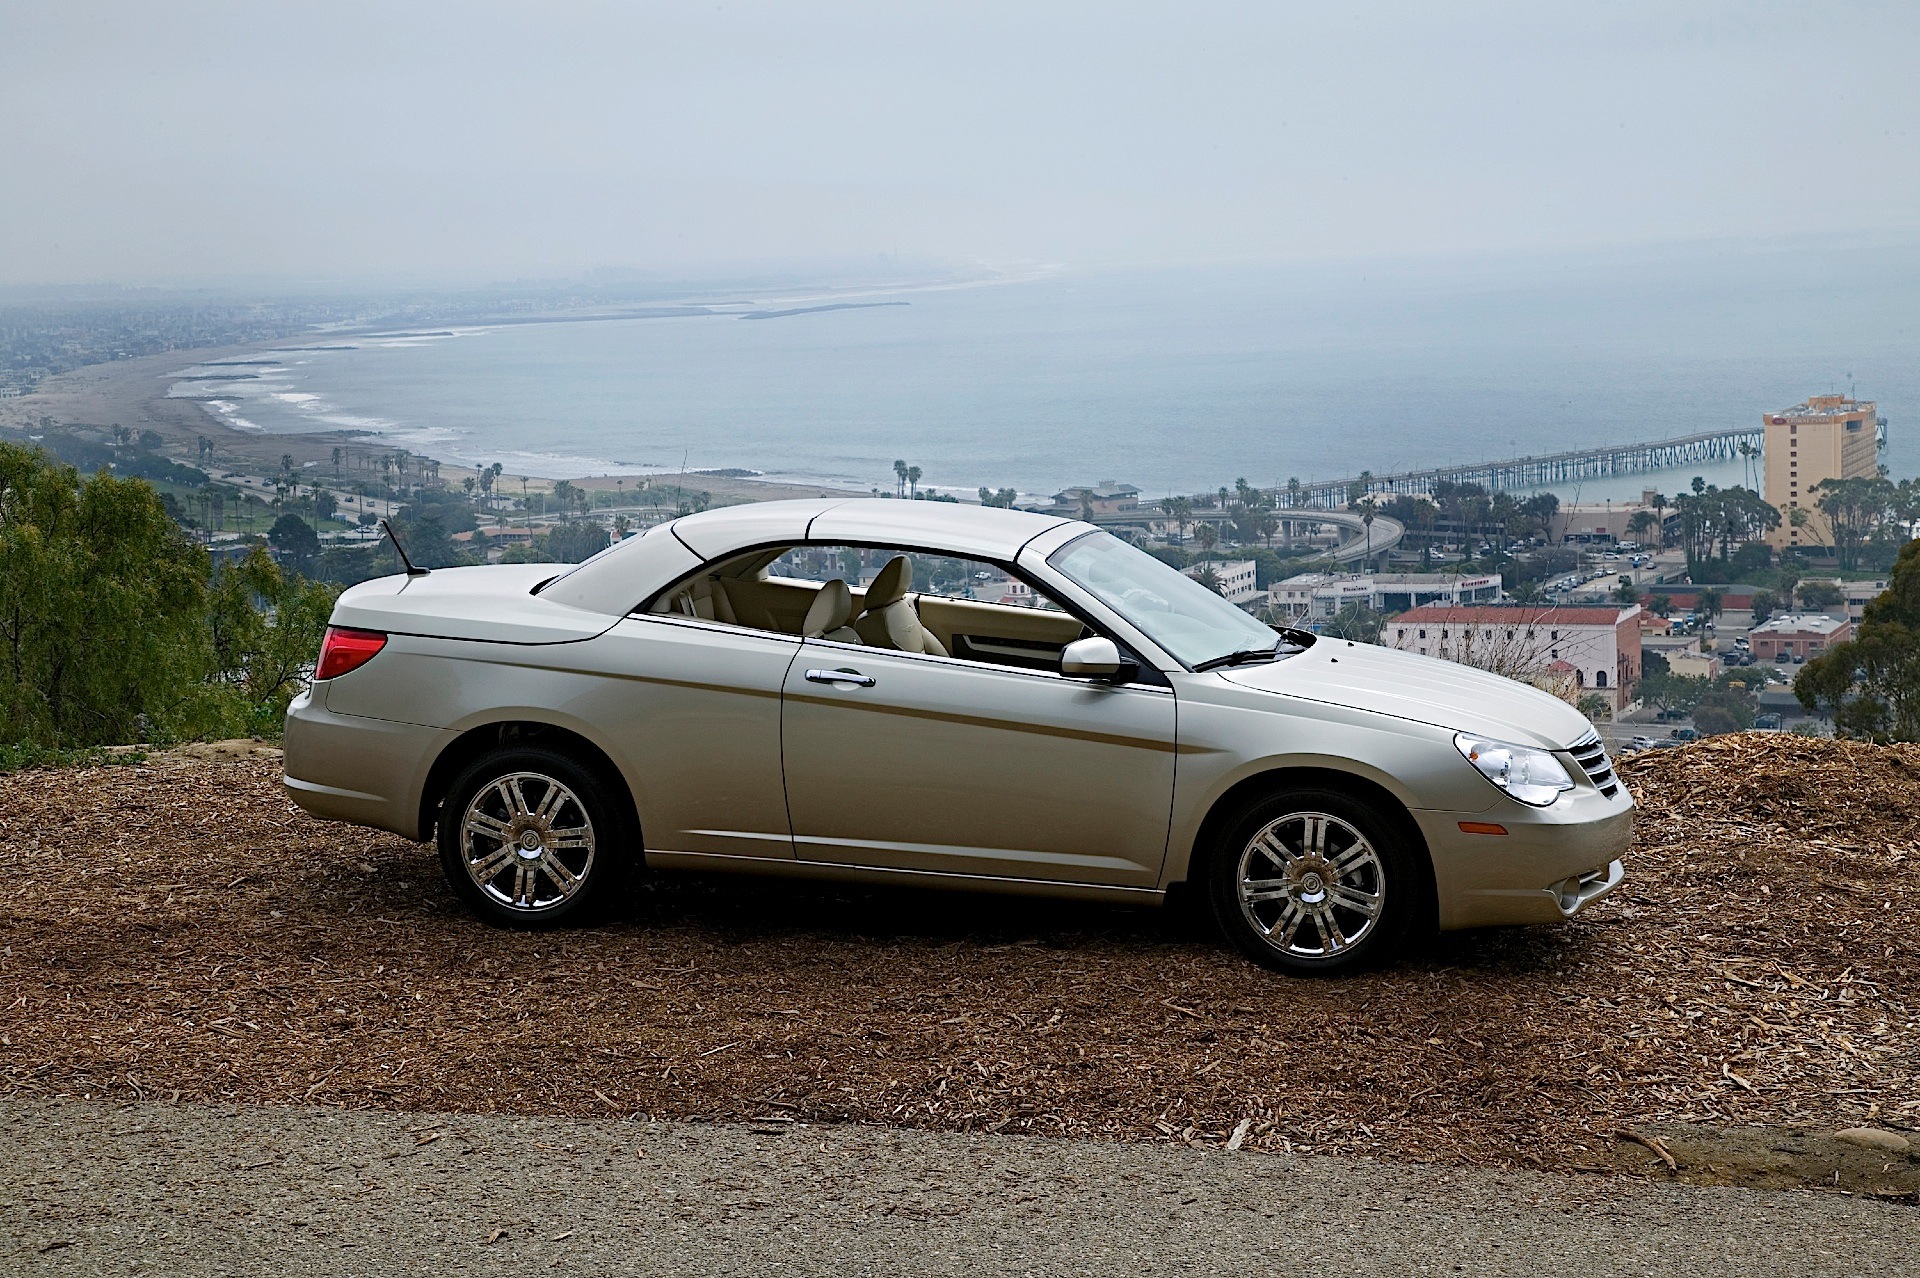 2008 Chrysler sebring convertible consumer review #5